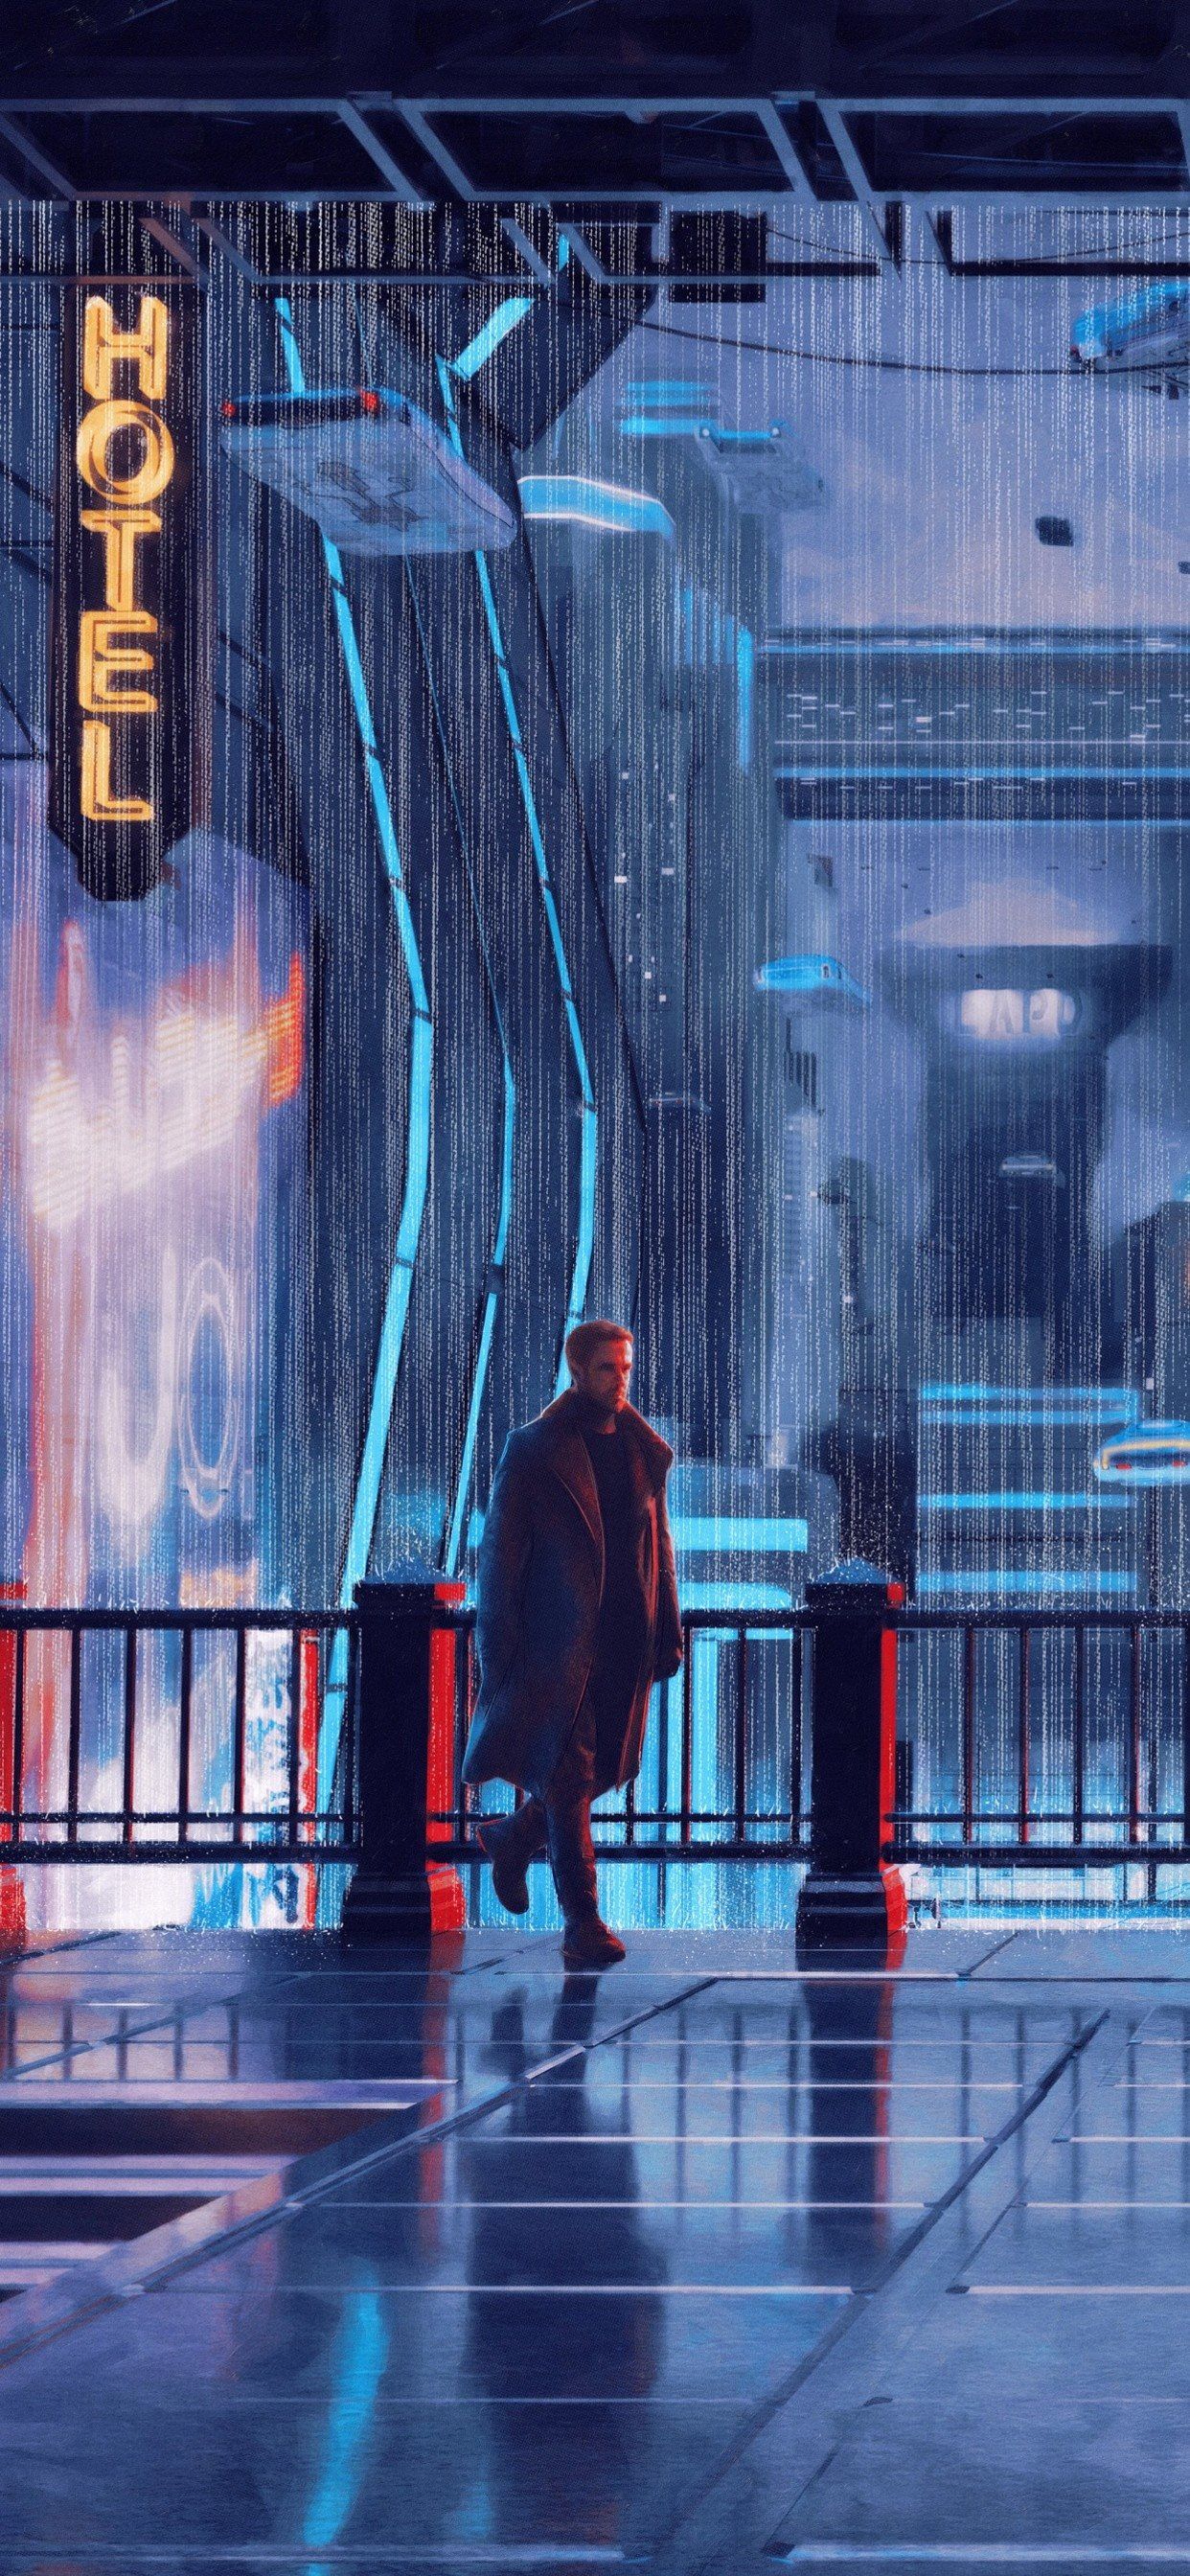 Cyberpunk City 4K wallpaper download